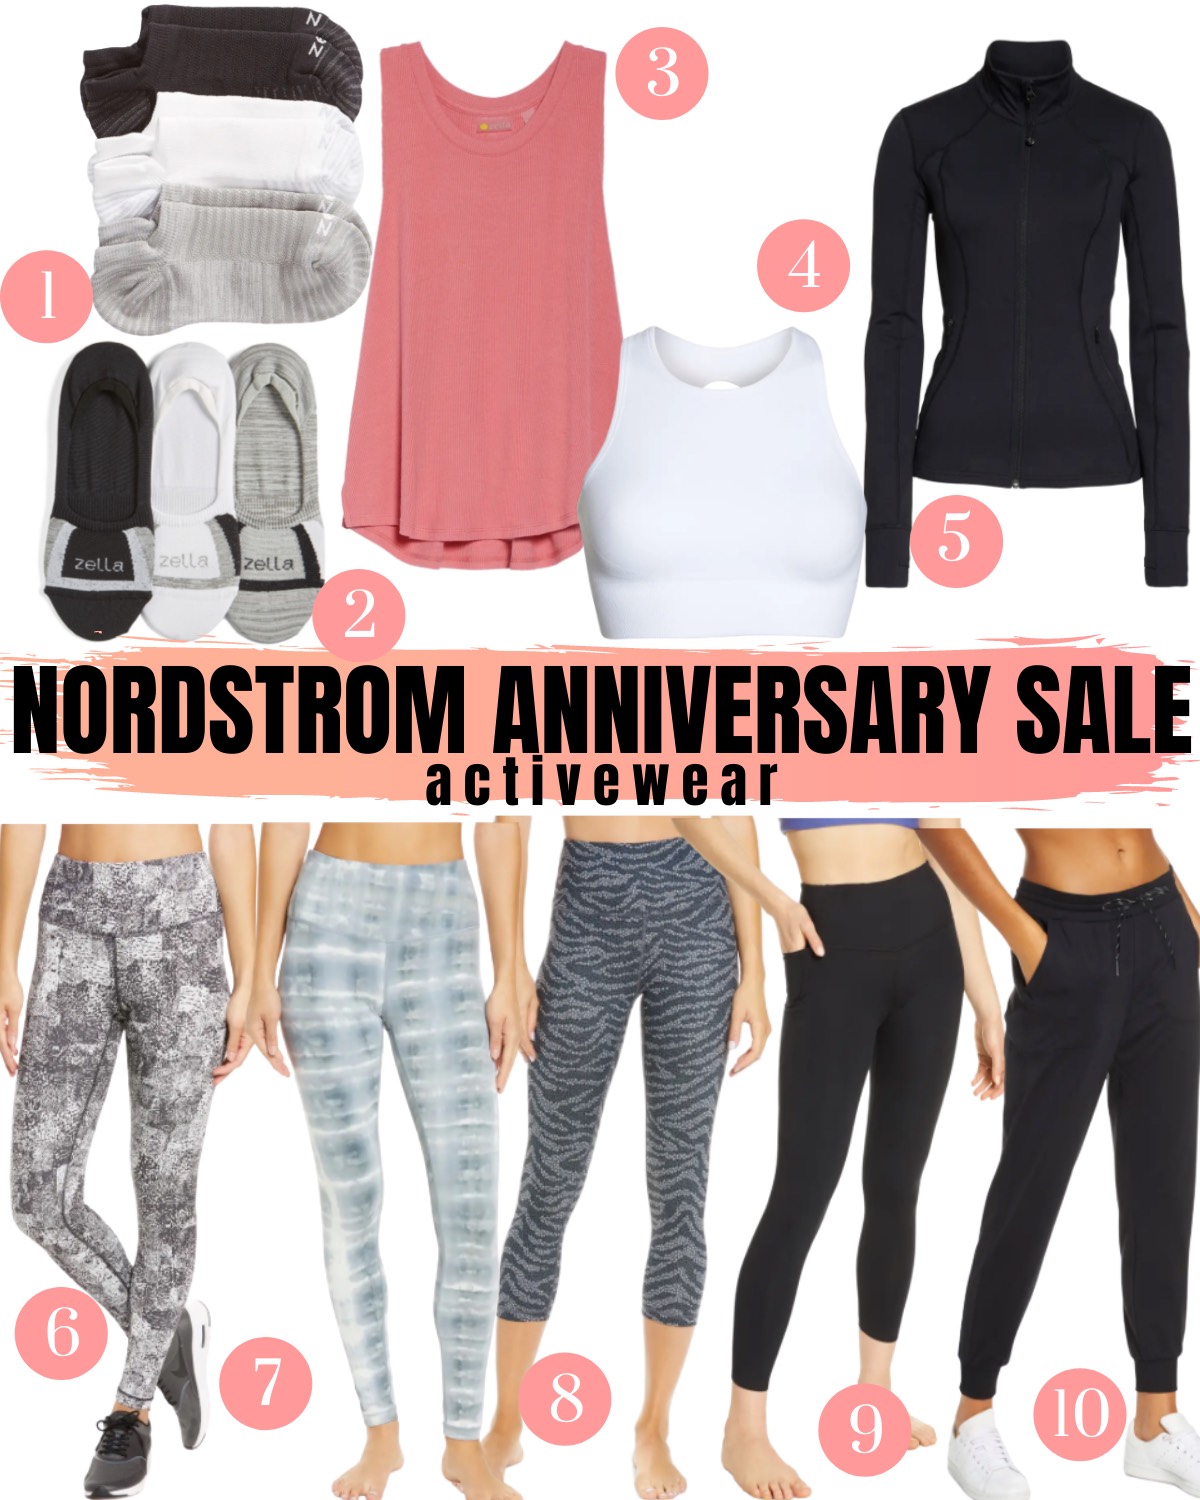 Nordstrom Anniversary Sale 2020 activewear